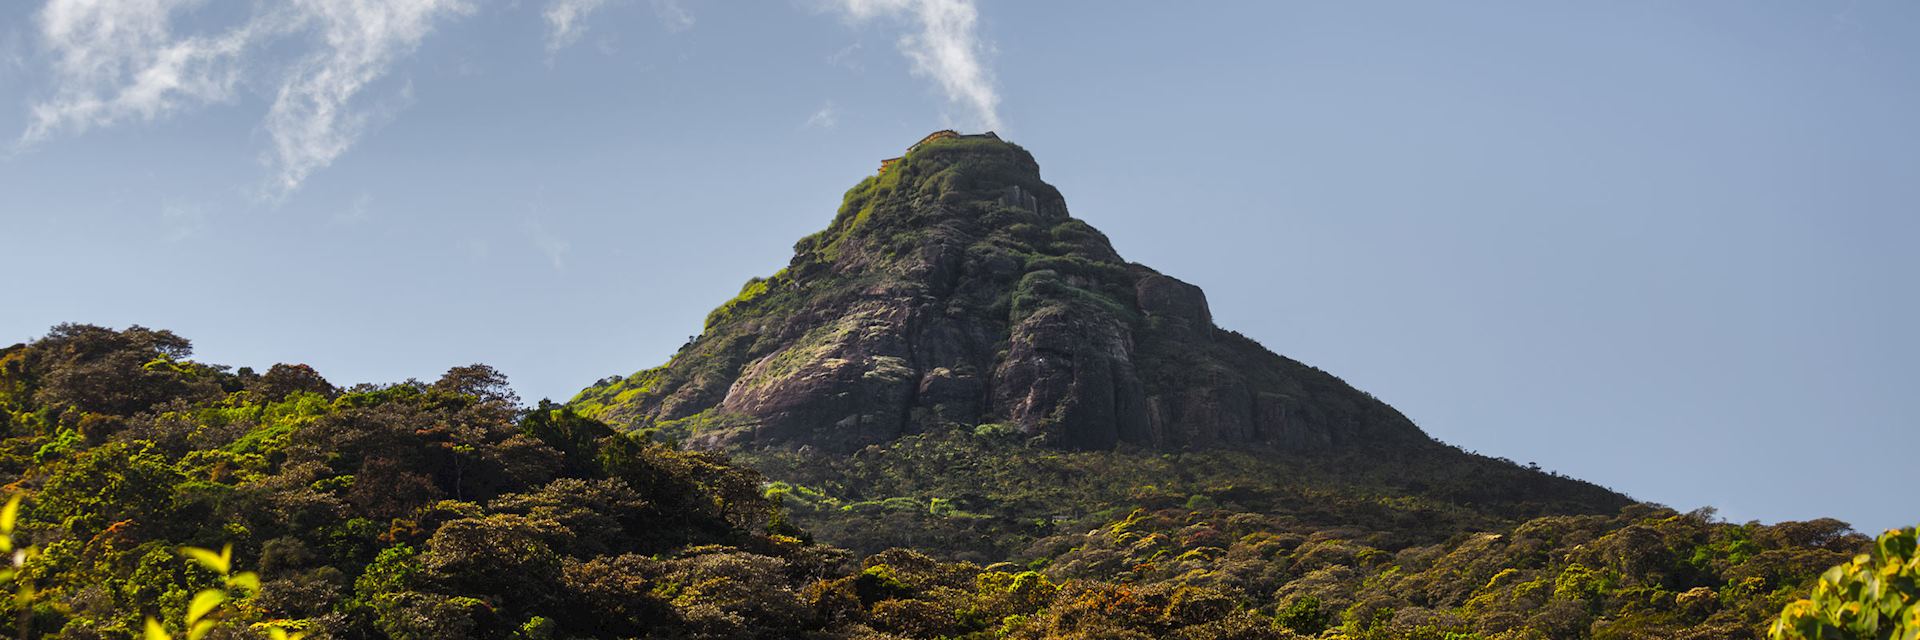 Adam's Peak, Sri Lanka